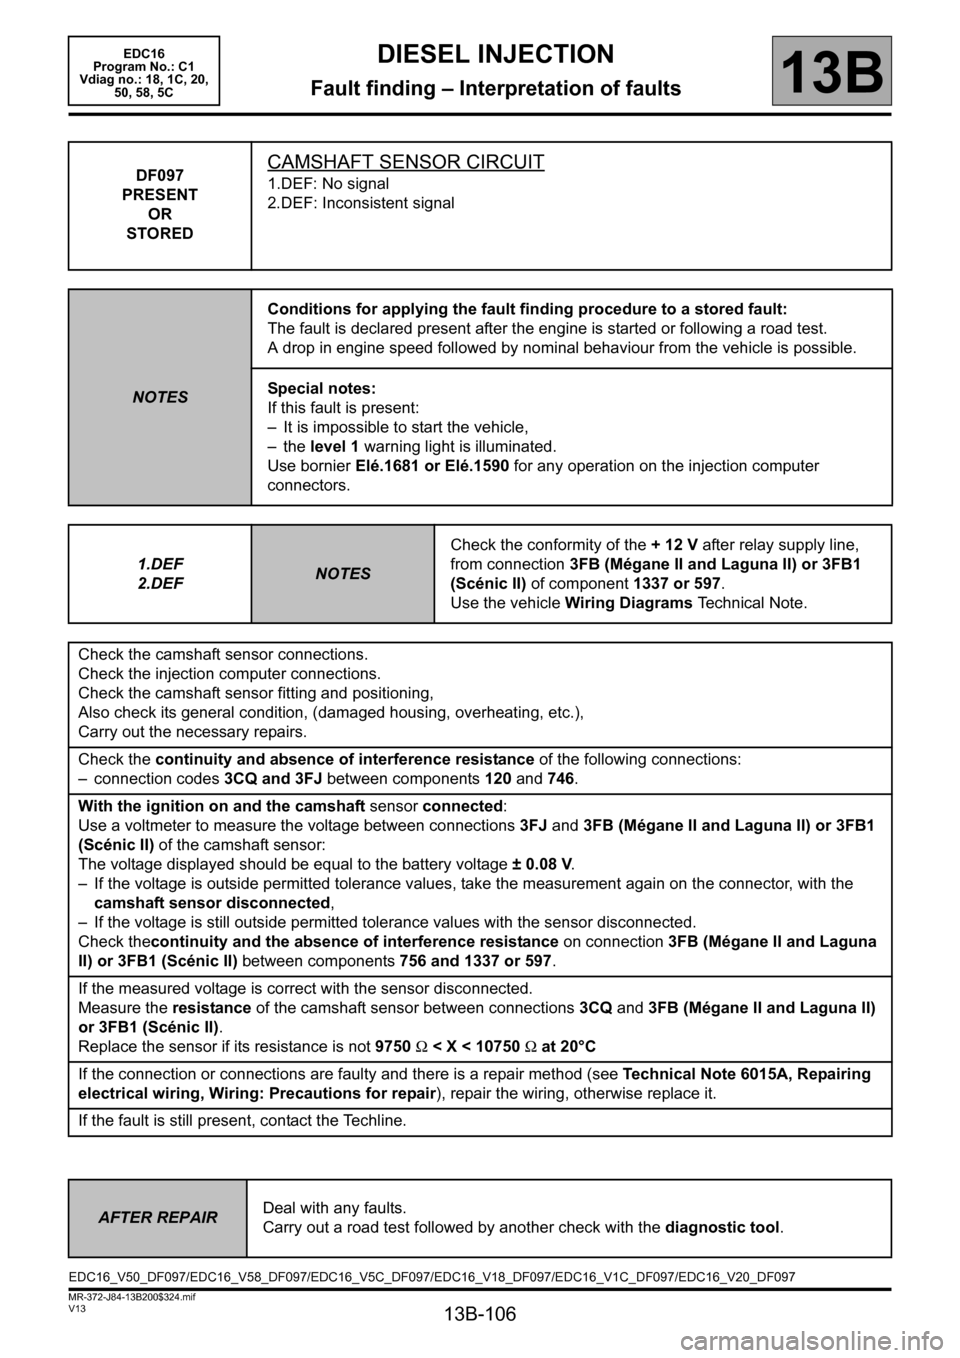 RENAULT SCENIC 2011 J95 / 3.G Engine And Peripherals EDC16 Service Manual 13B-106
MR-372-J84-13B200$324.mif
V13
DIESEL INJECTION
Fault finding – Interpretation of faults
EDC16  
Program No.: C1 
Vdiag no.: 18, 1C, 20,  
50, 58, 5C
13B
DF097
PRESENT
OR
STOREDCAMSHAFT SENSO